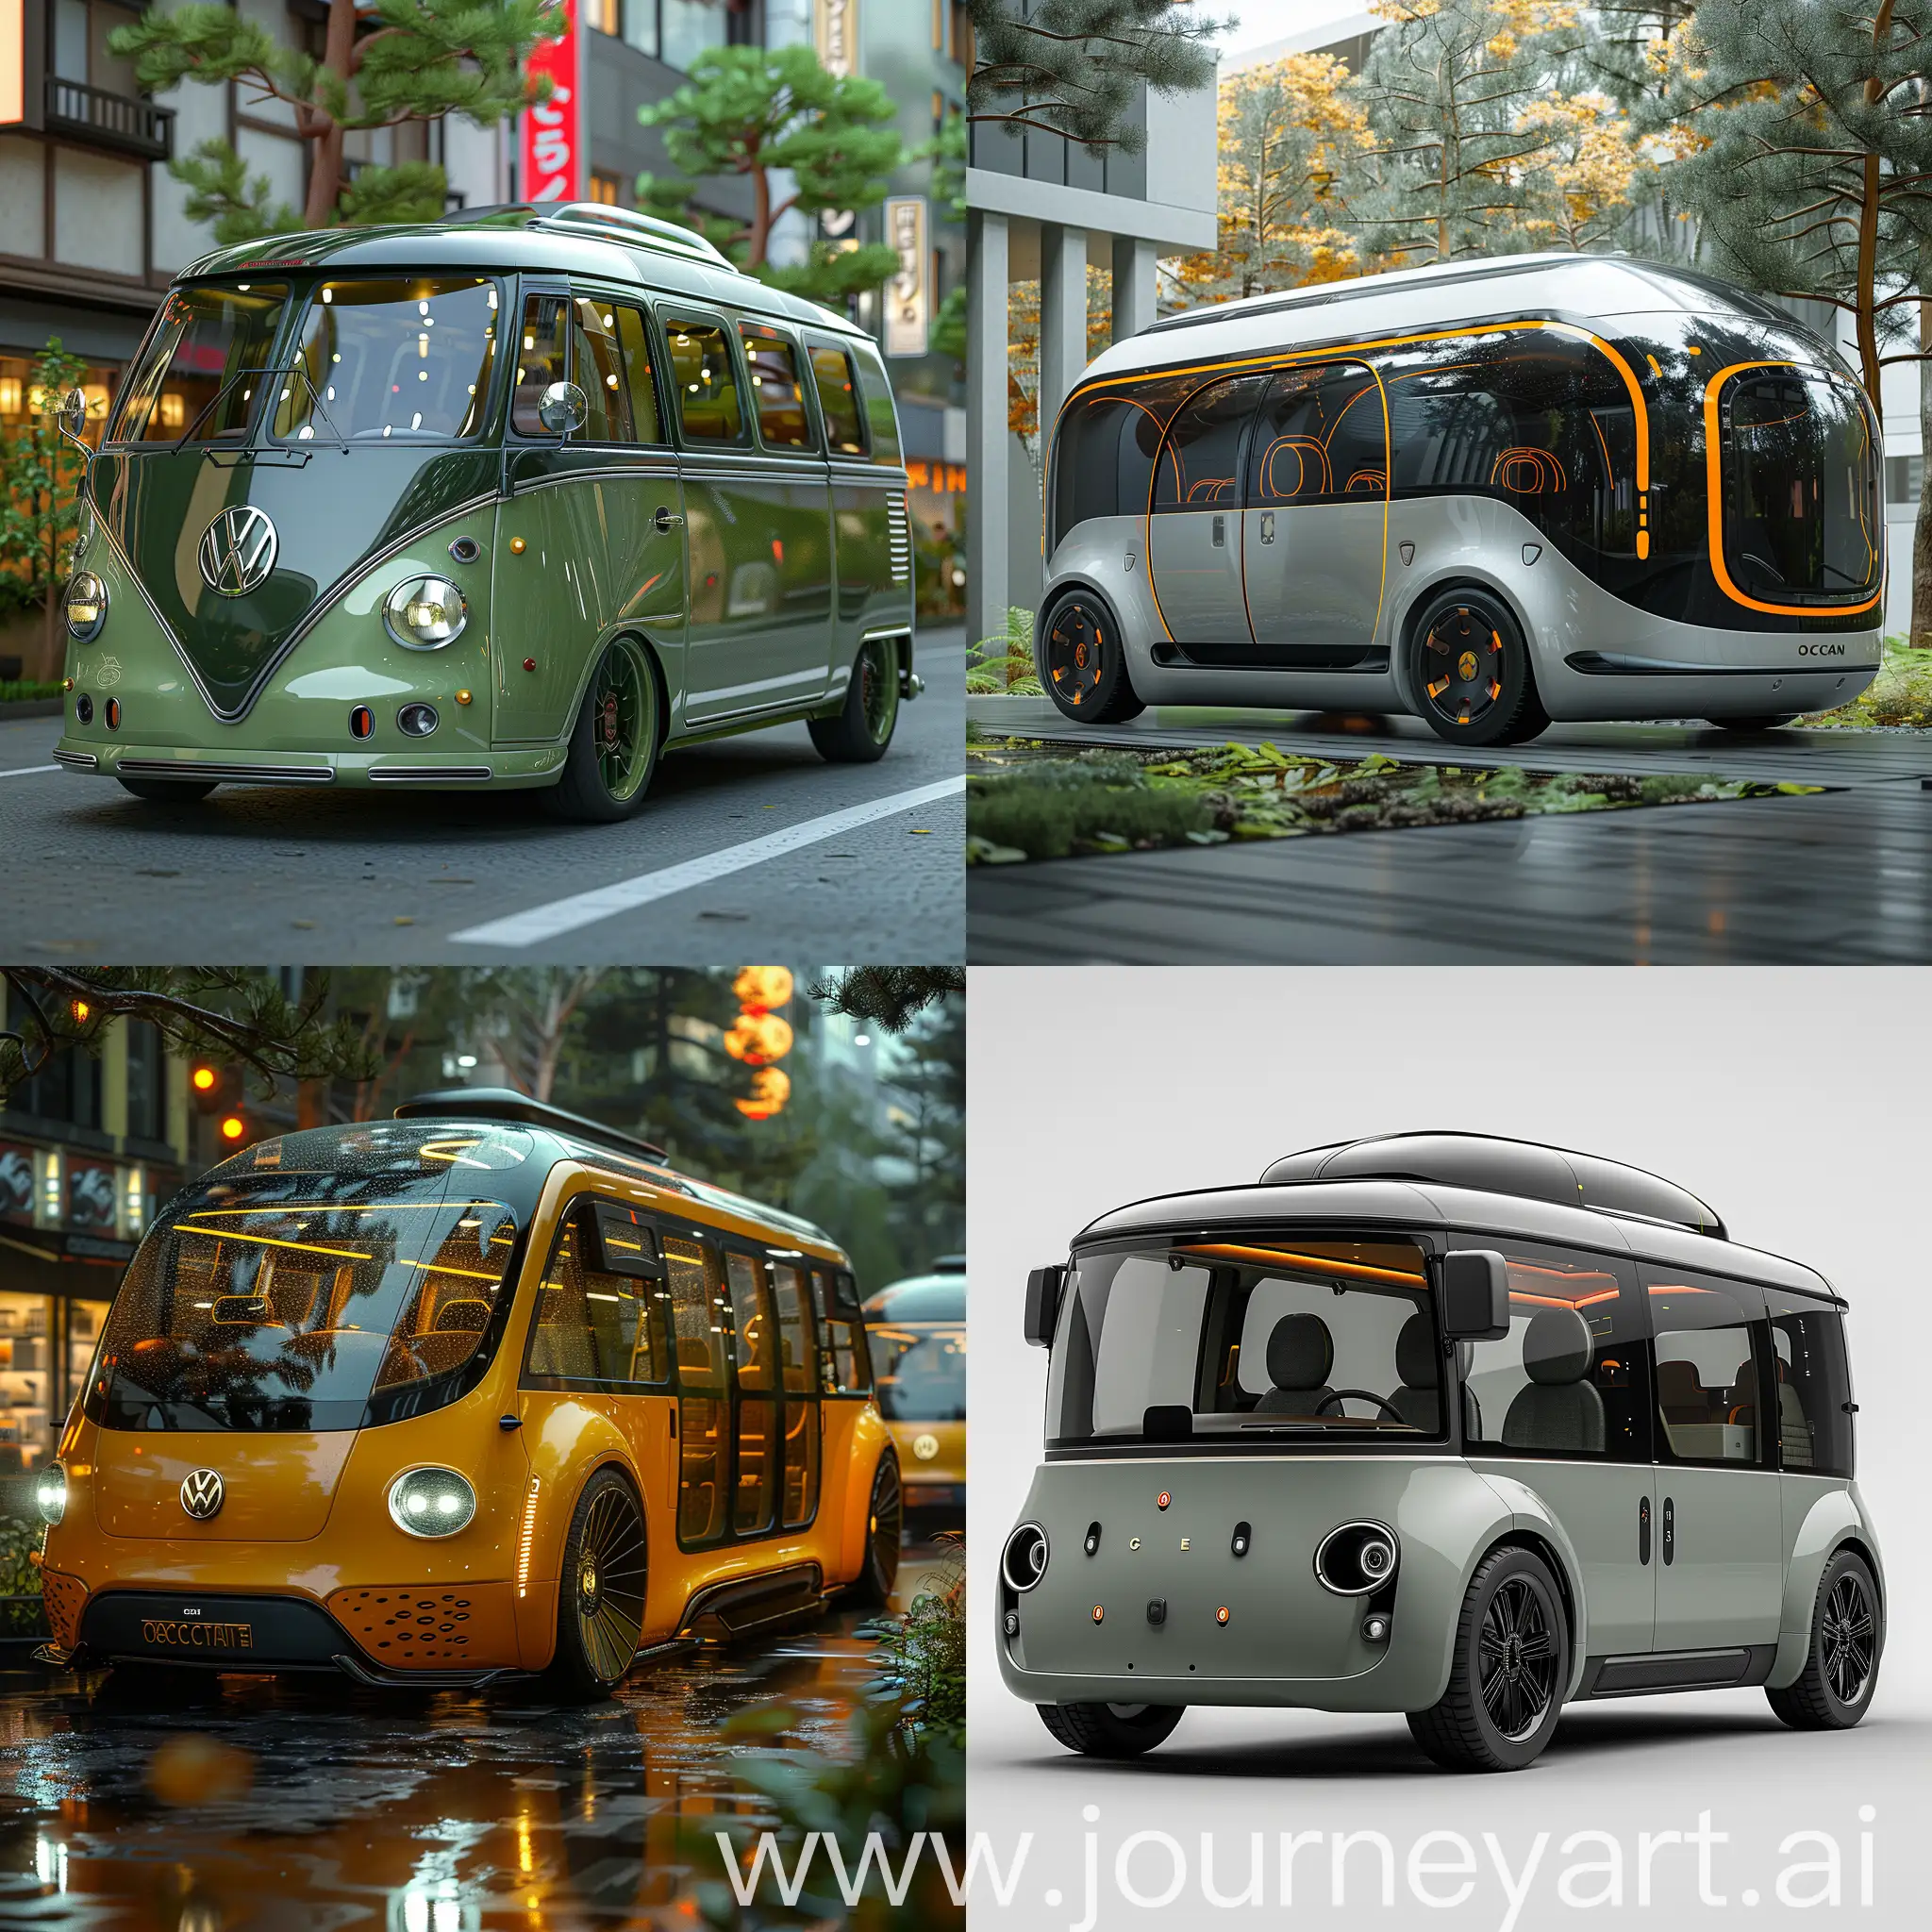 Futuristic-EcoFriendly-Microbus-in-Urban-Environment